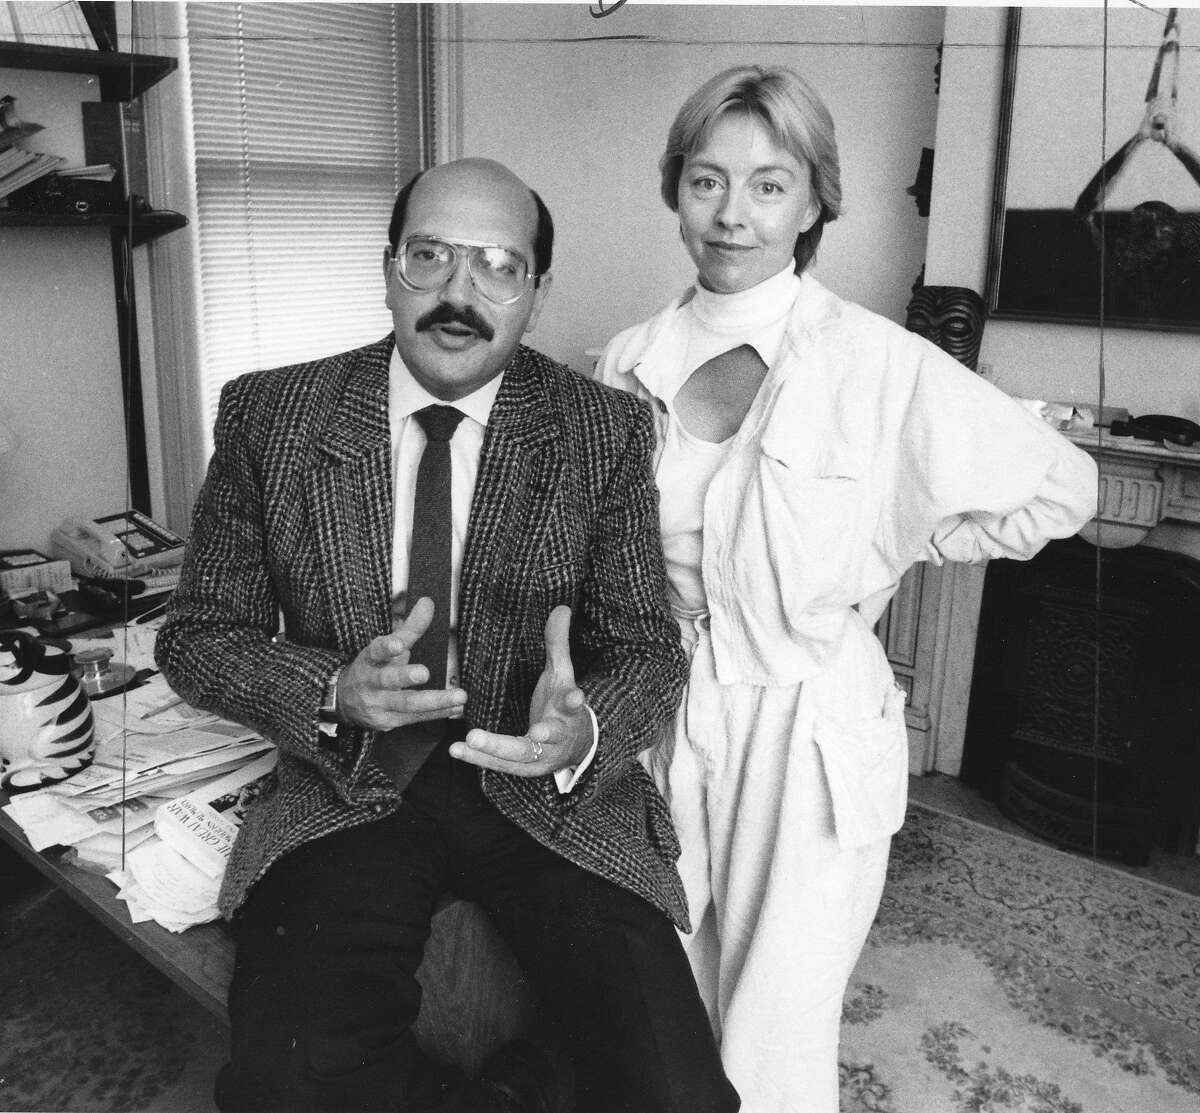 Private investigators Jack Palladino and Sandra Sutherland in 1984